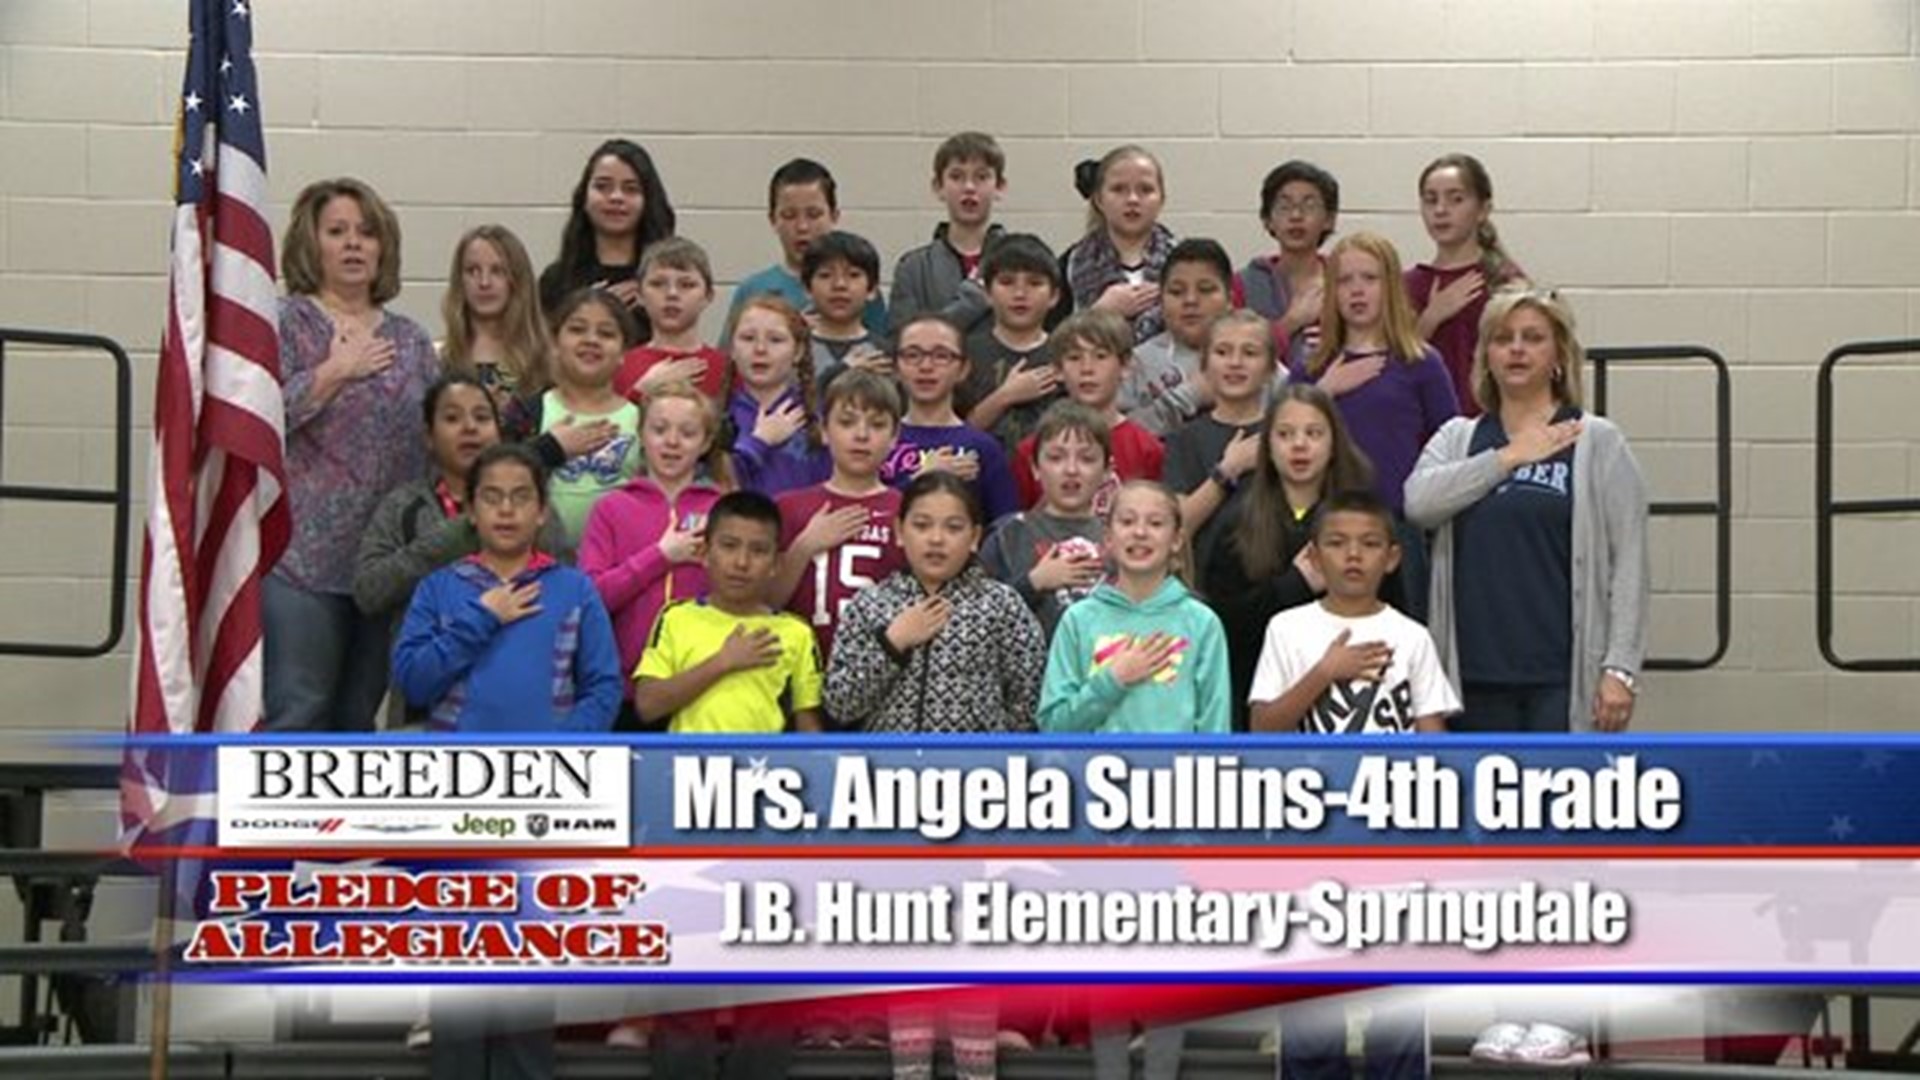 J.B. Hunt Elementary - Springdale, Mrs. Sullins - Fourth Grade